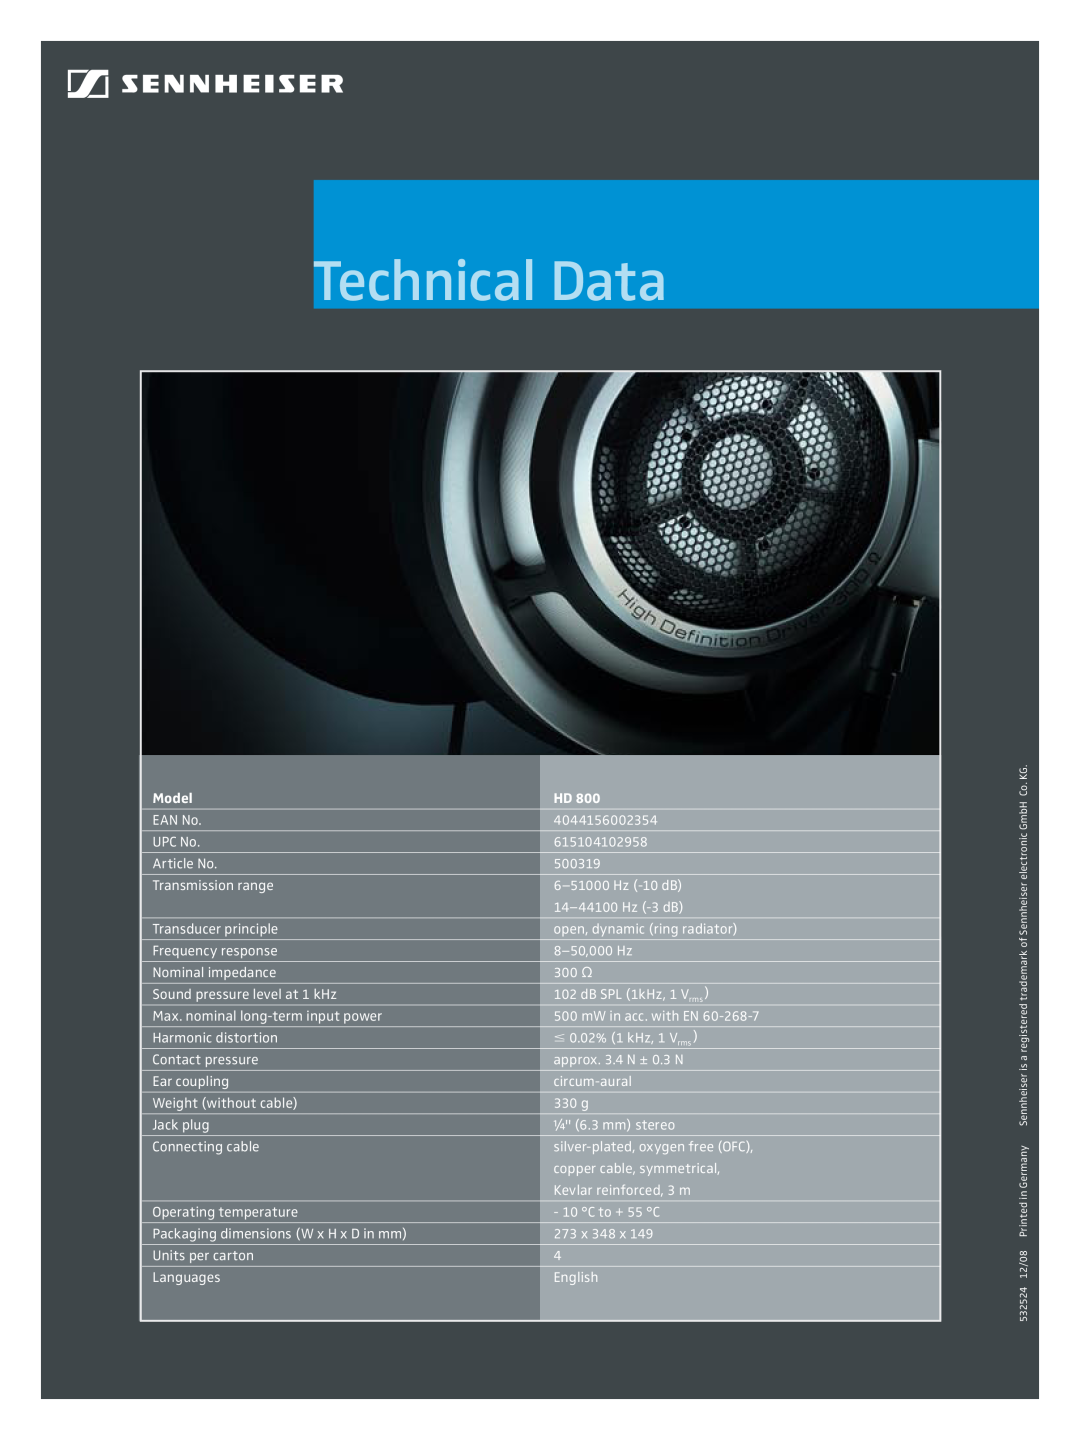 Sennheiser HD 800 manual Technical Data, Model 